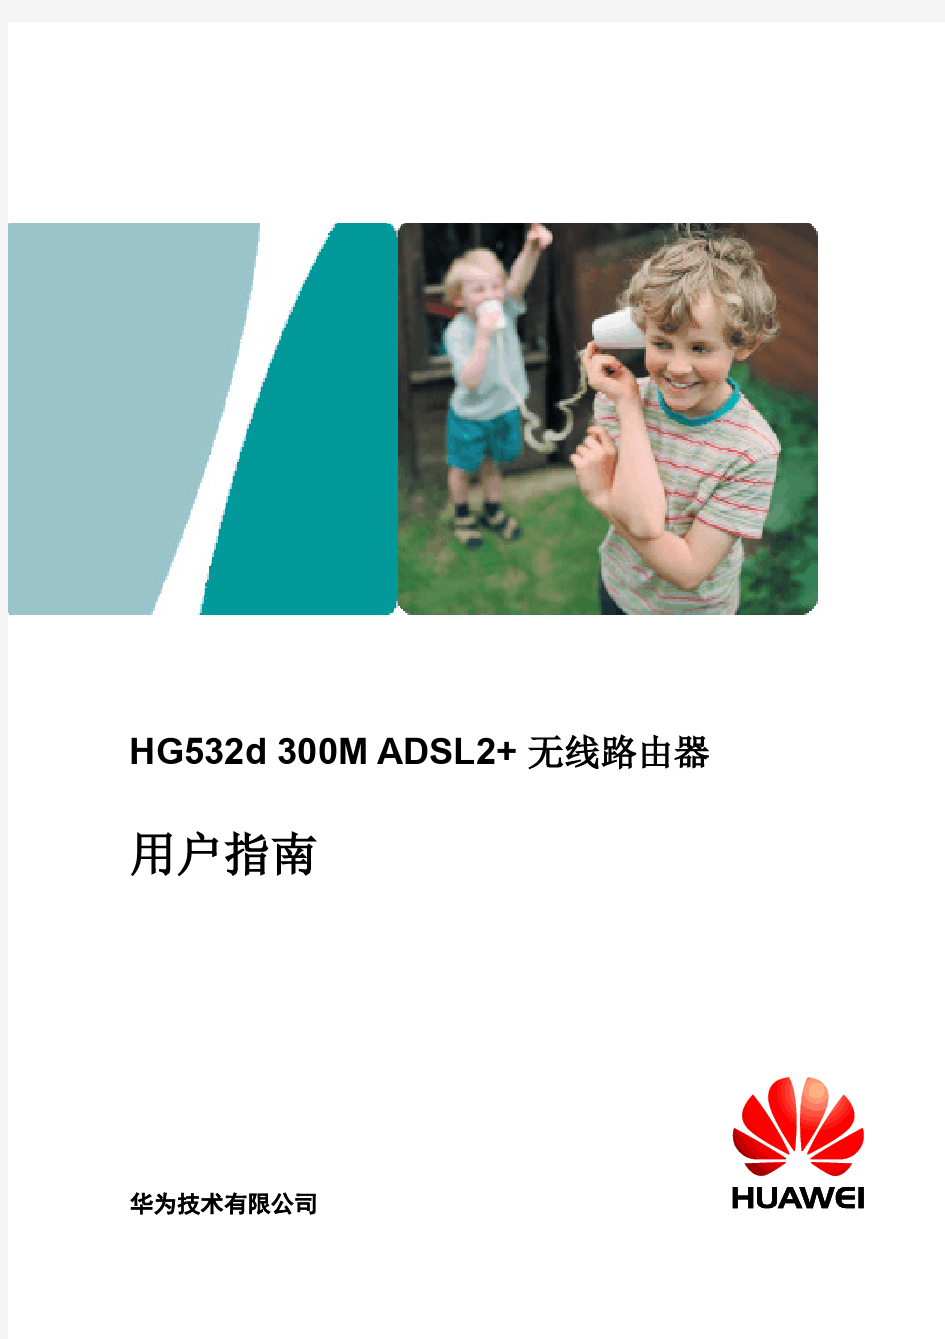 HG532d 300M ADSL2+ 无线路由器 用户指南(02,中文,渠道)